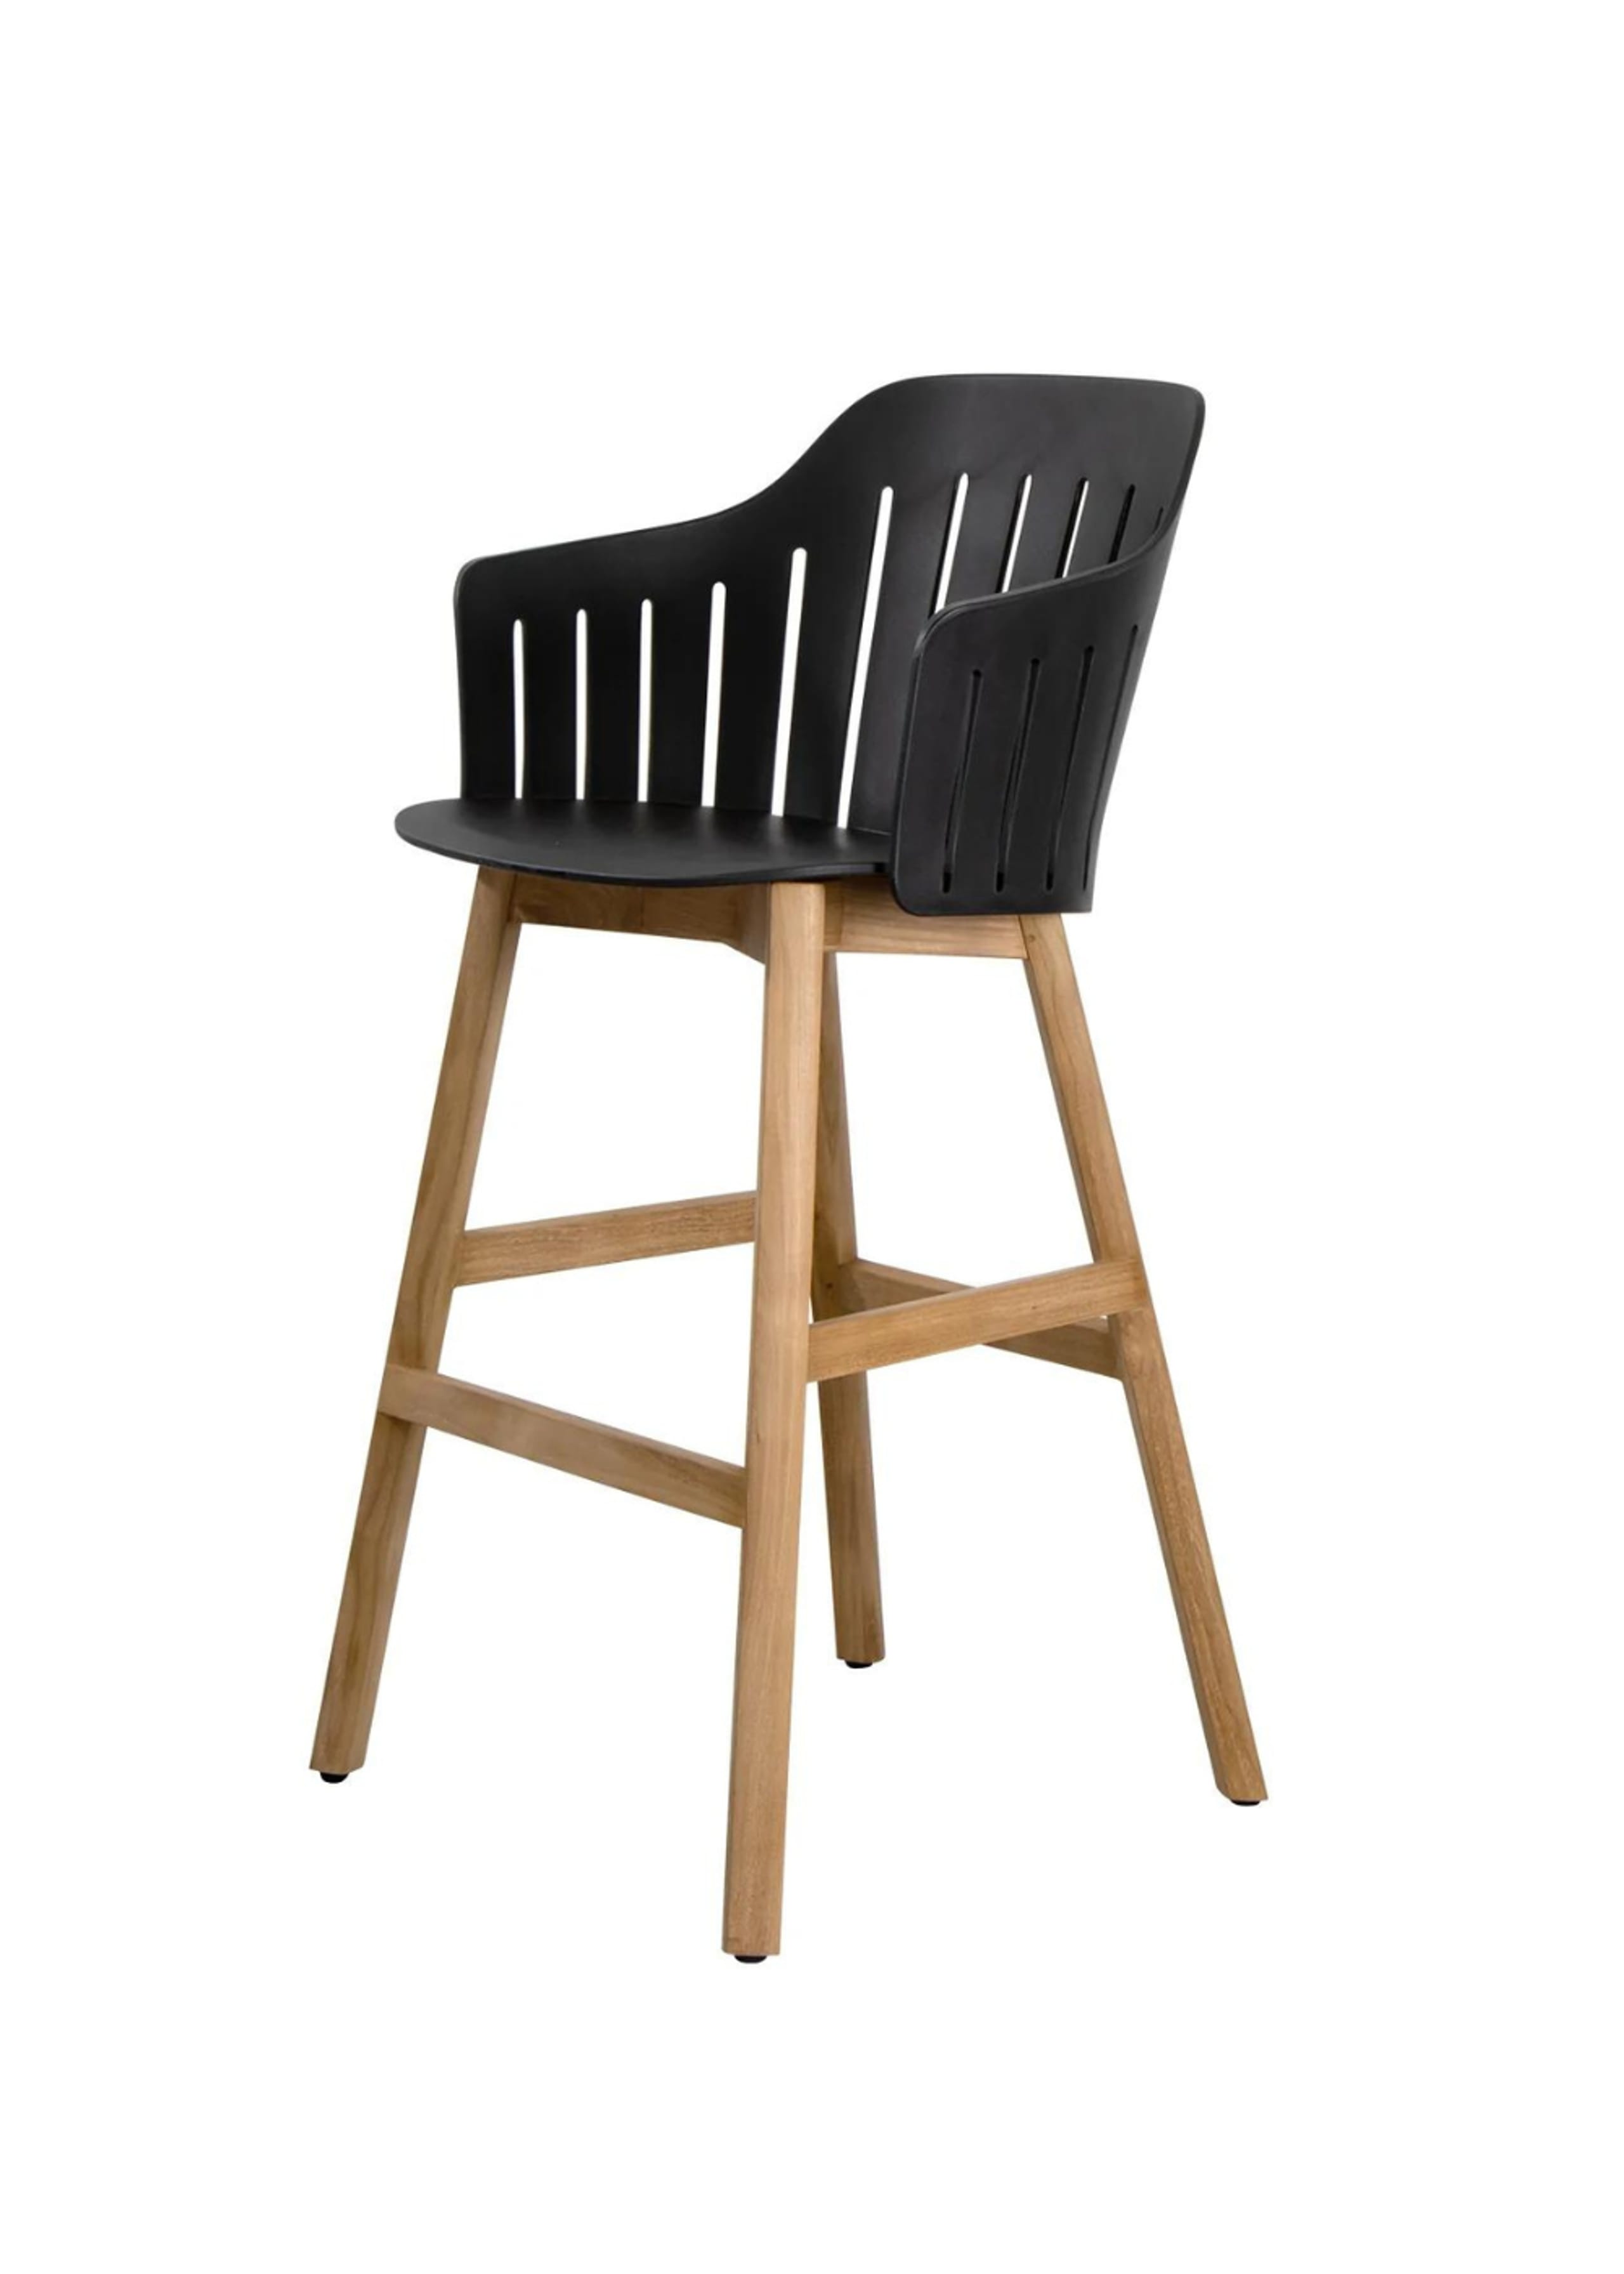 Cane-line - Bar stool - Choice Barstool - Outdoor - Stel: